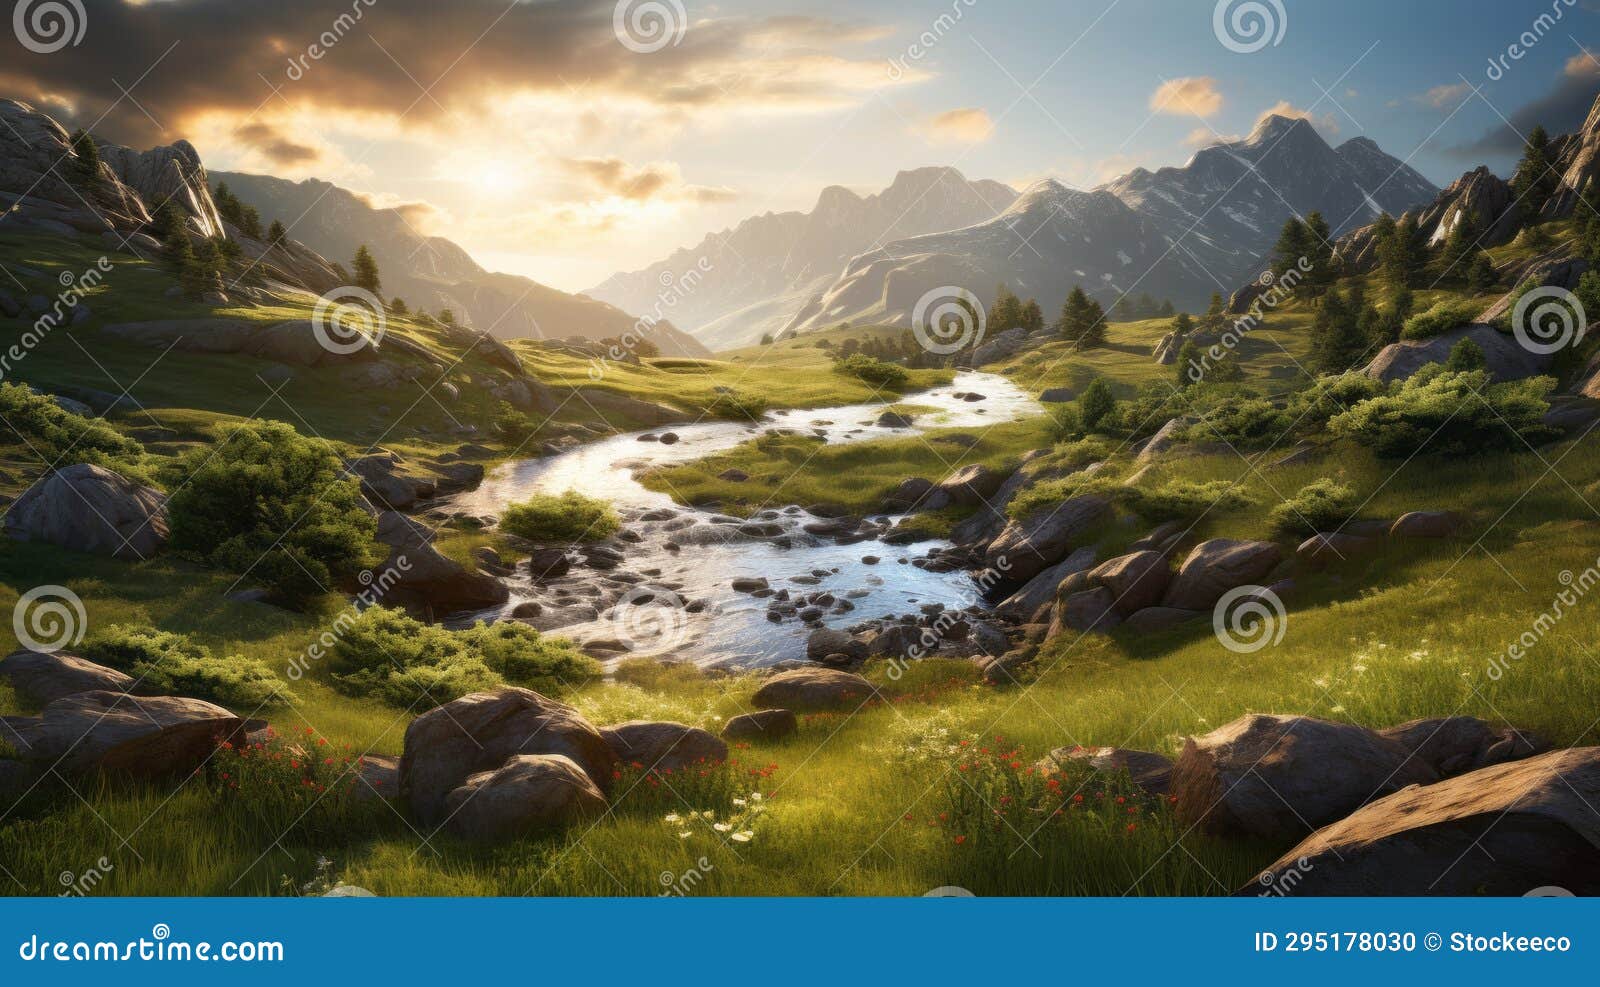 golden hour wilderness landscape: vray mountain landscape with stream